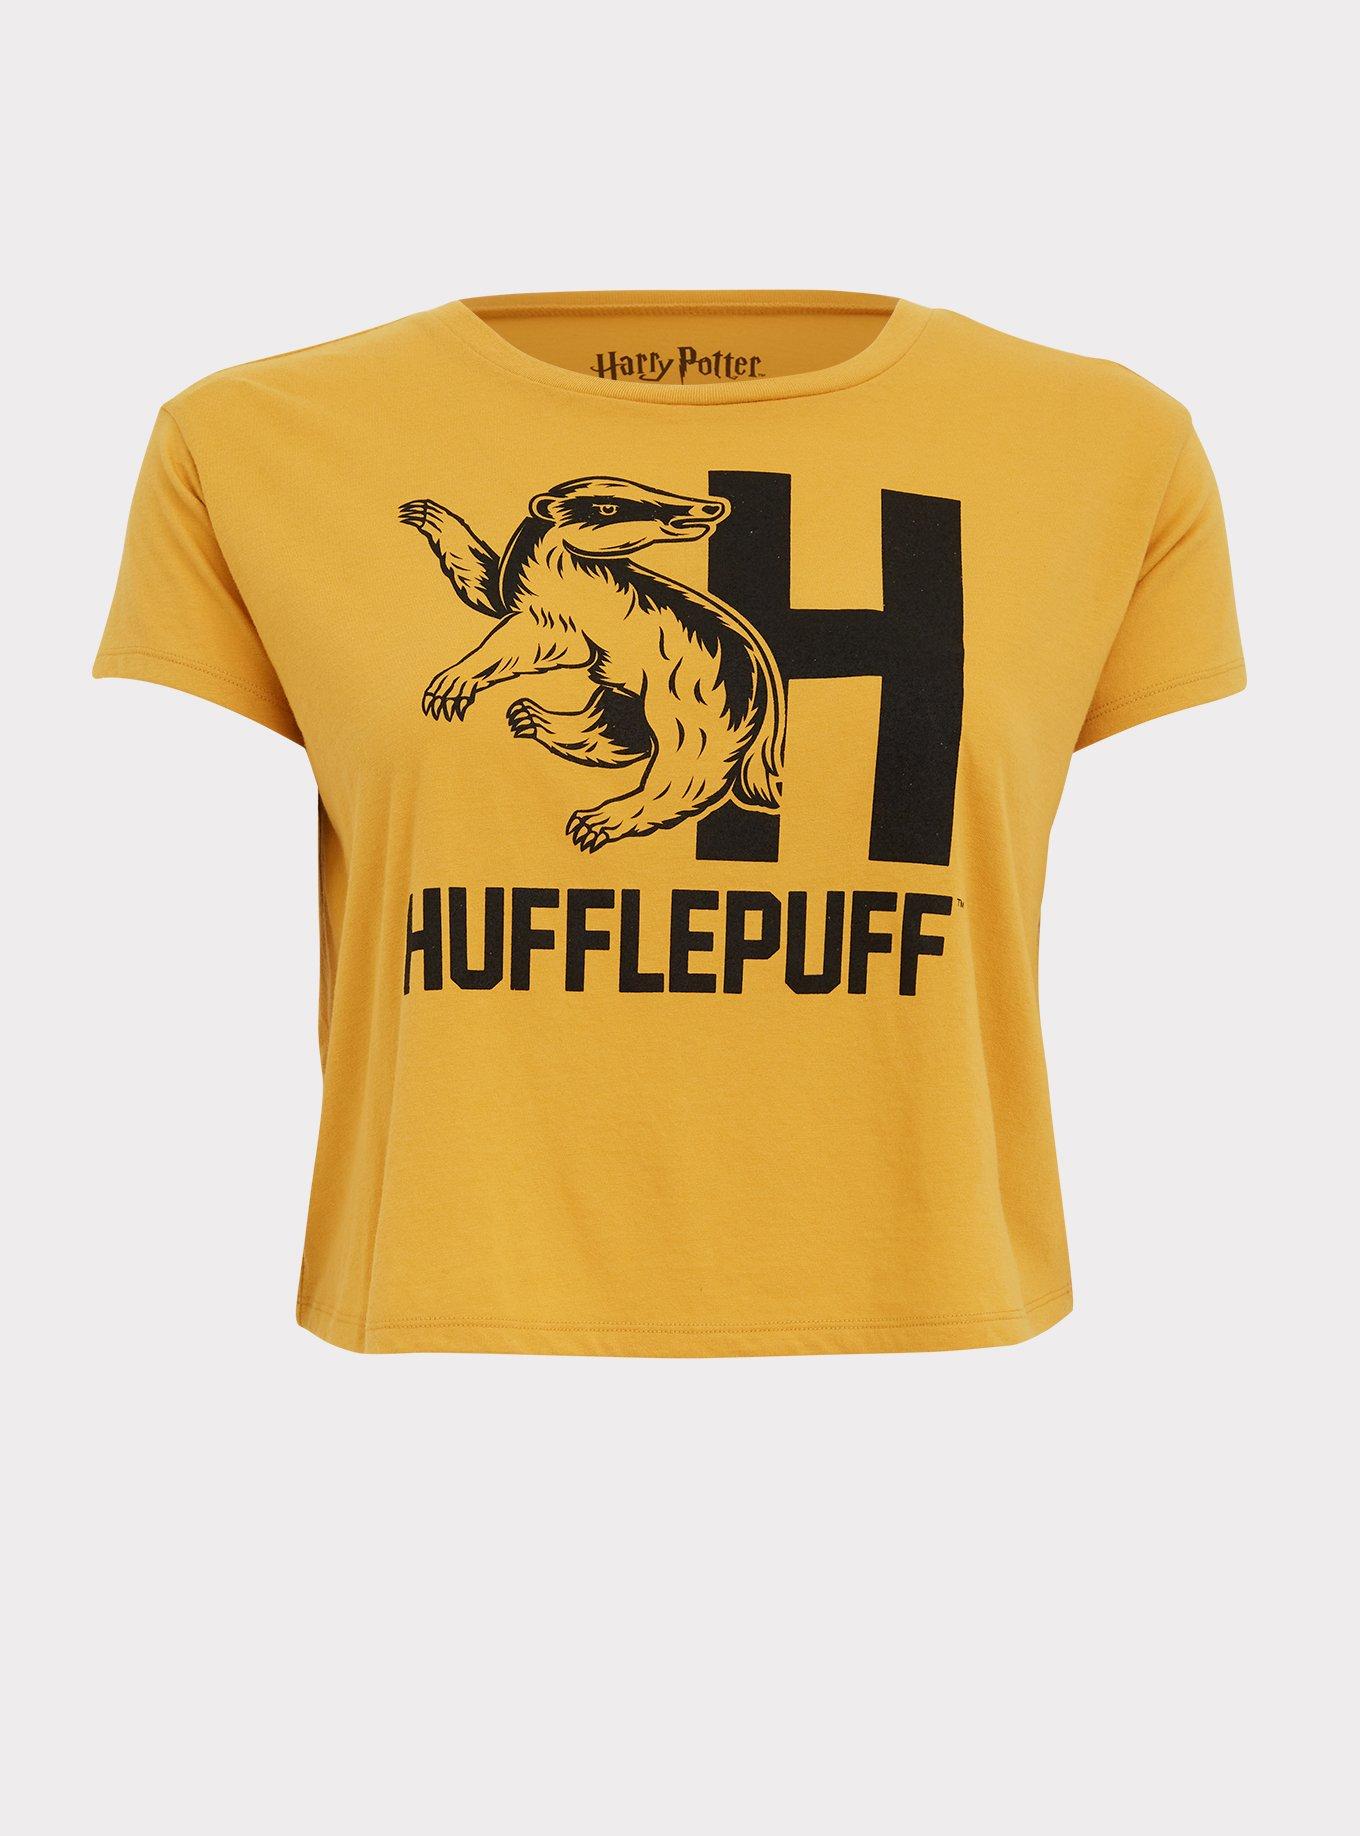 Plus Size - Harry Potter Hufflepuff Mustard Yellow Crop Tee -